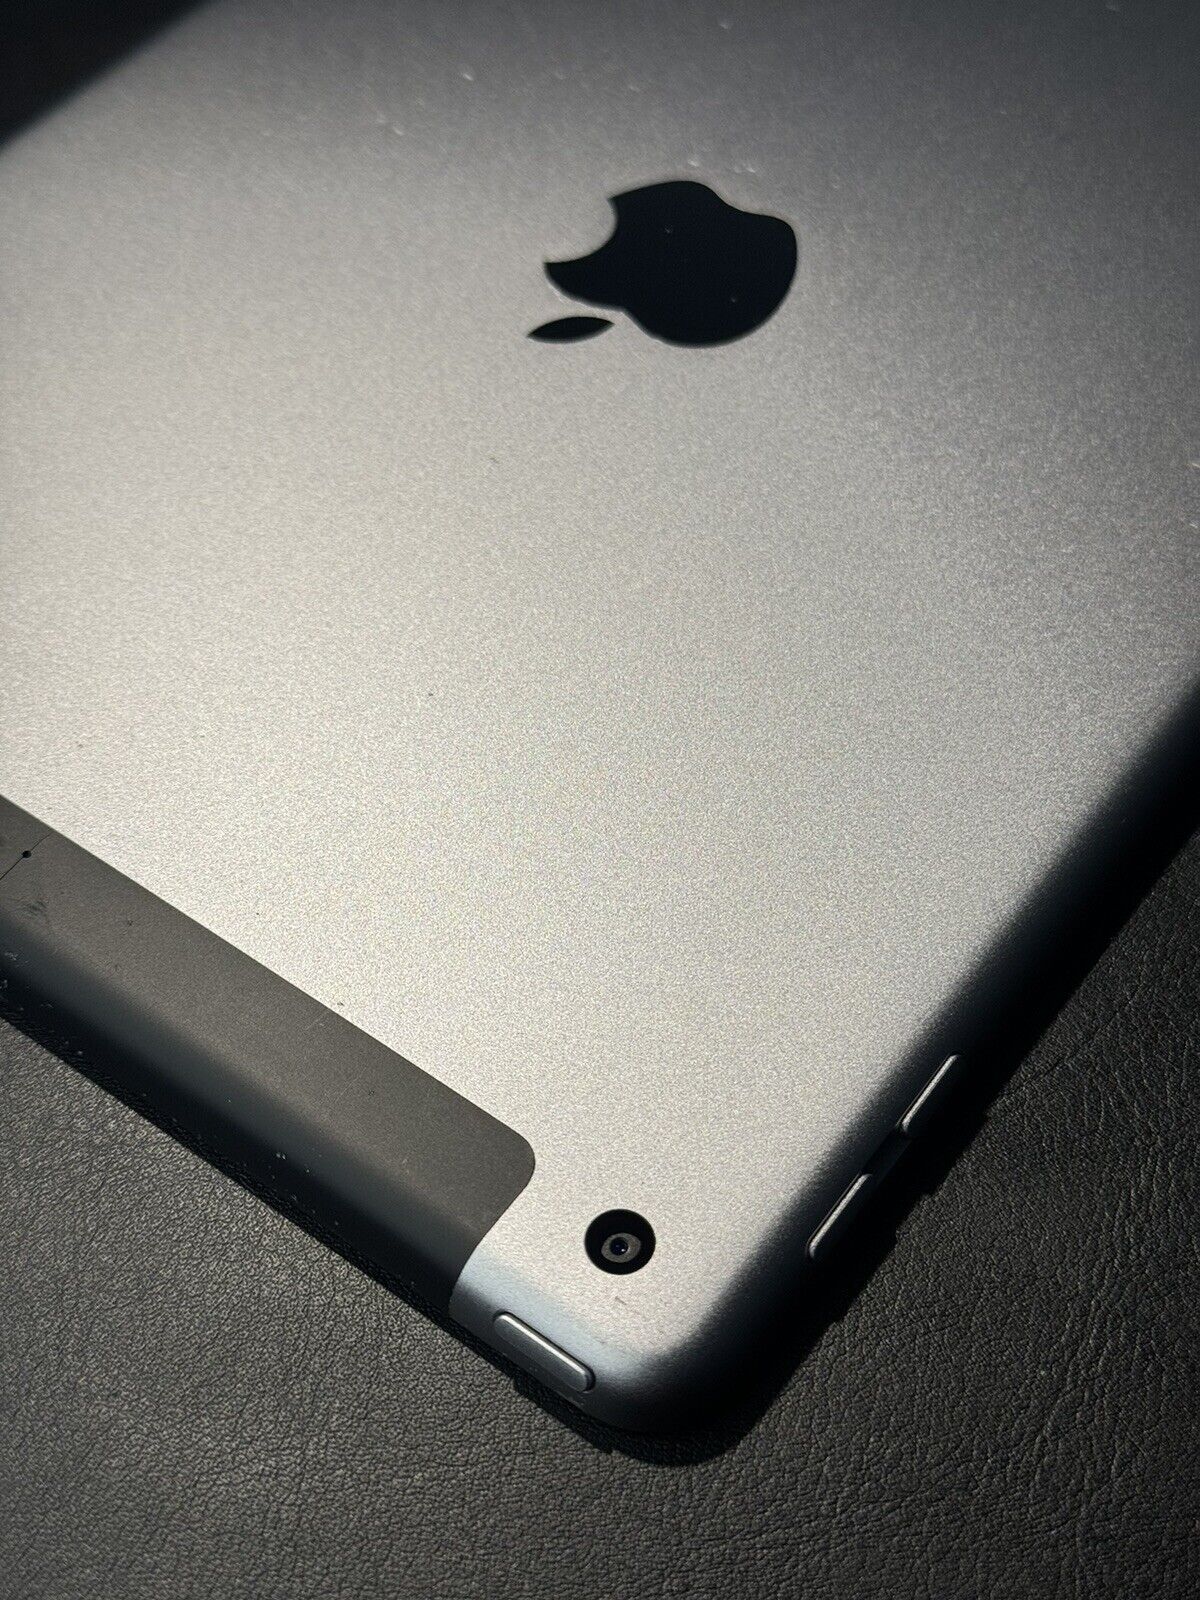 Apple iPad 6th Gen. 32GB, Wi-Fi + Cellular (Unlocked), 9.7in - Space Gray Mint